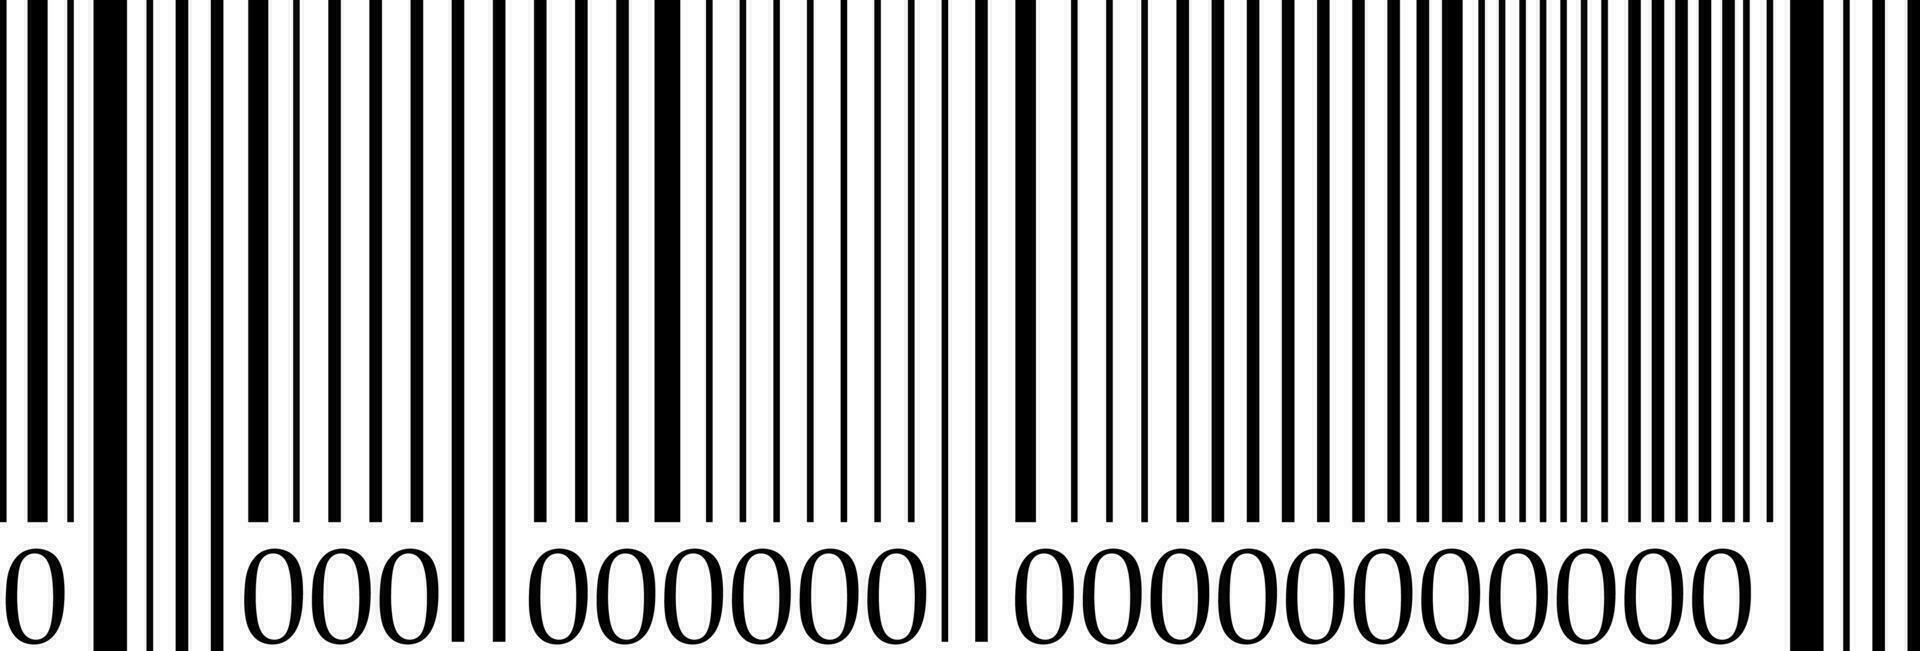 Barcode numbers illustration design art vector